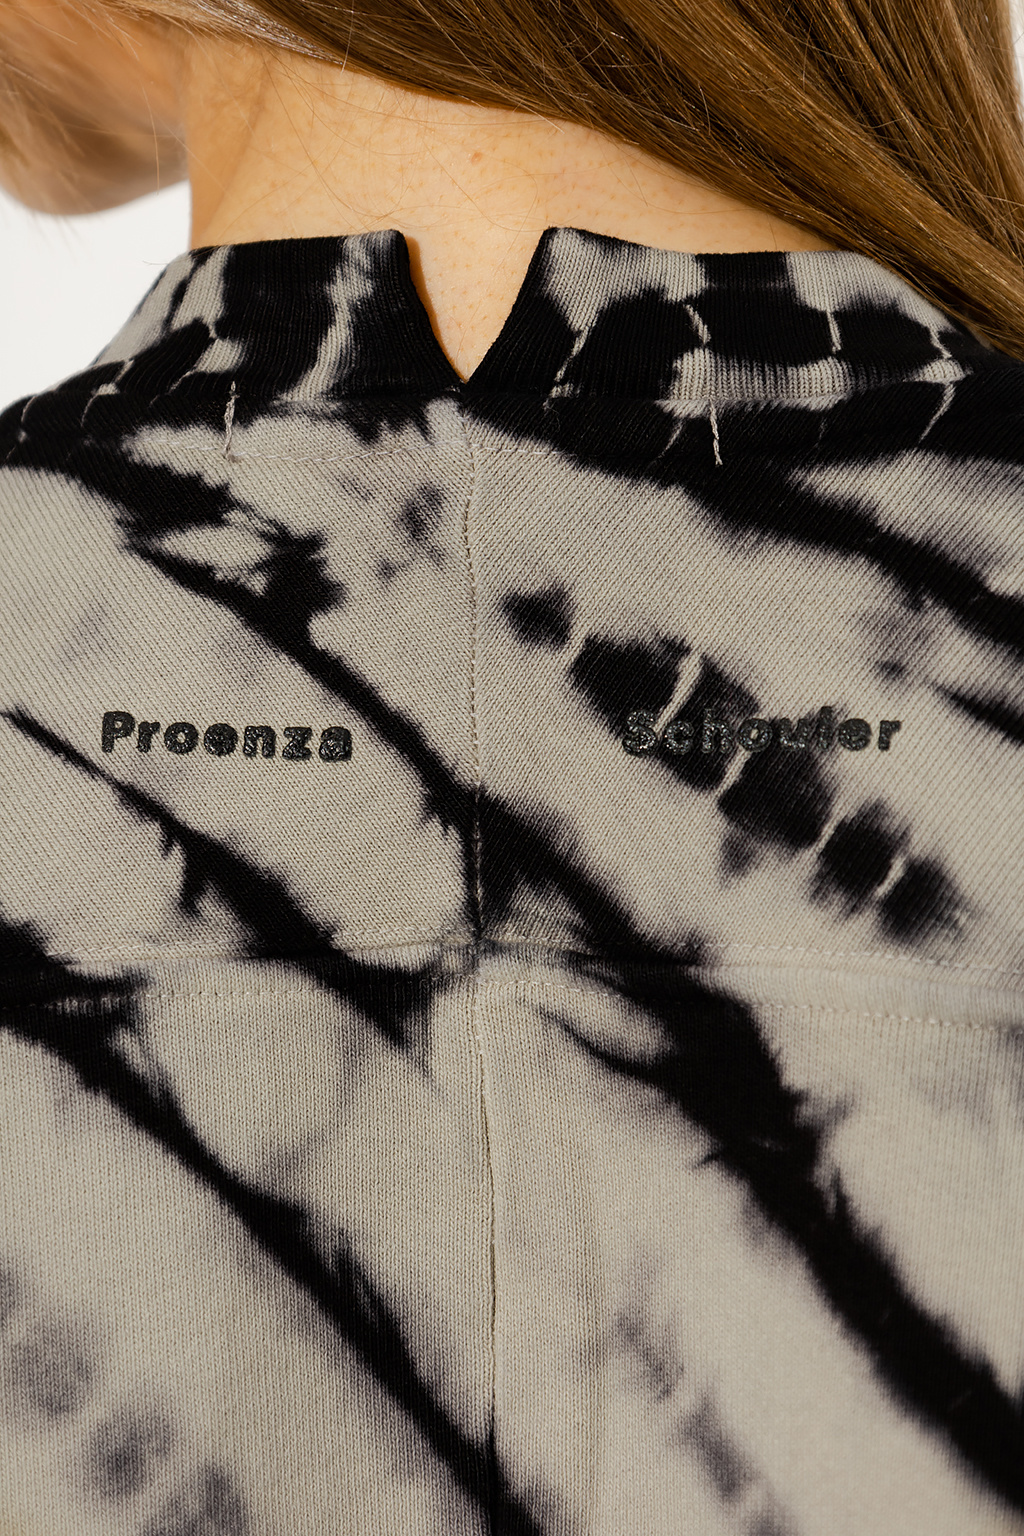 Proenza Schouler White Label Proenza Schouler Textured Crepe Cut Out Dress Nero